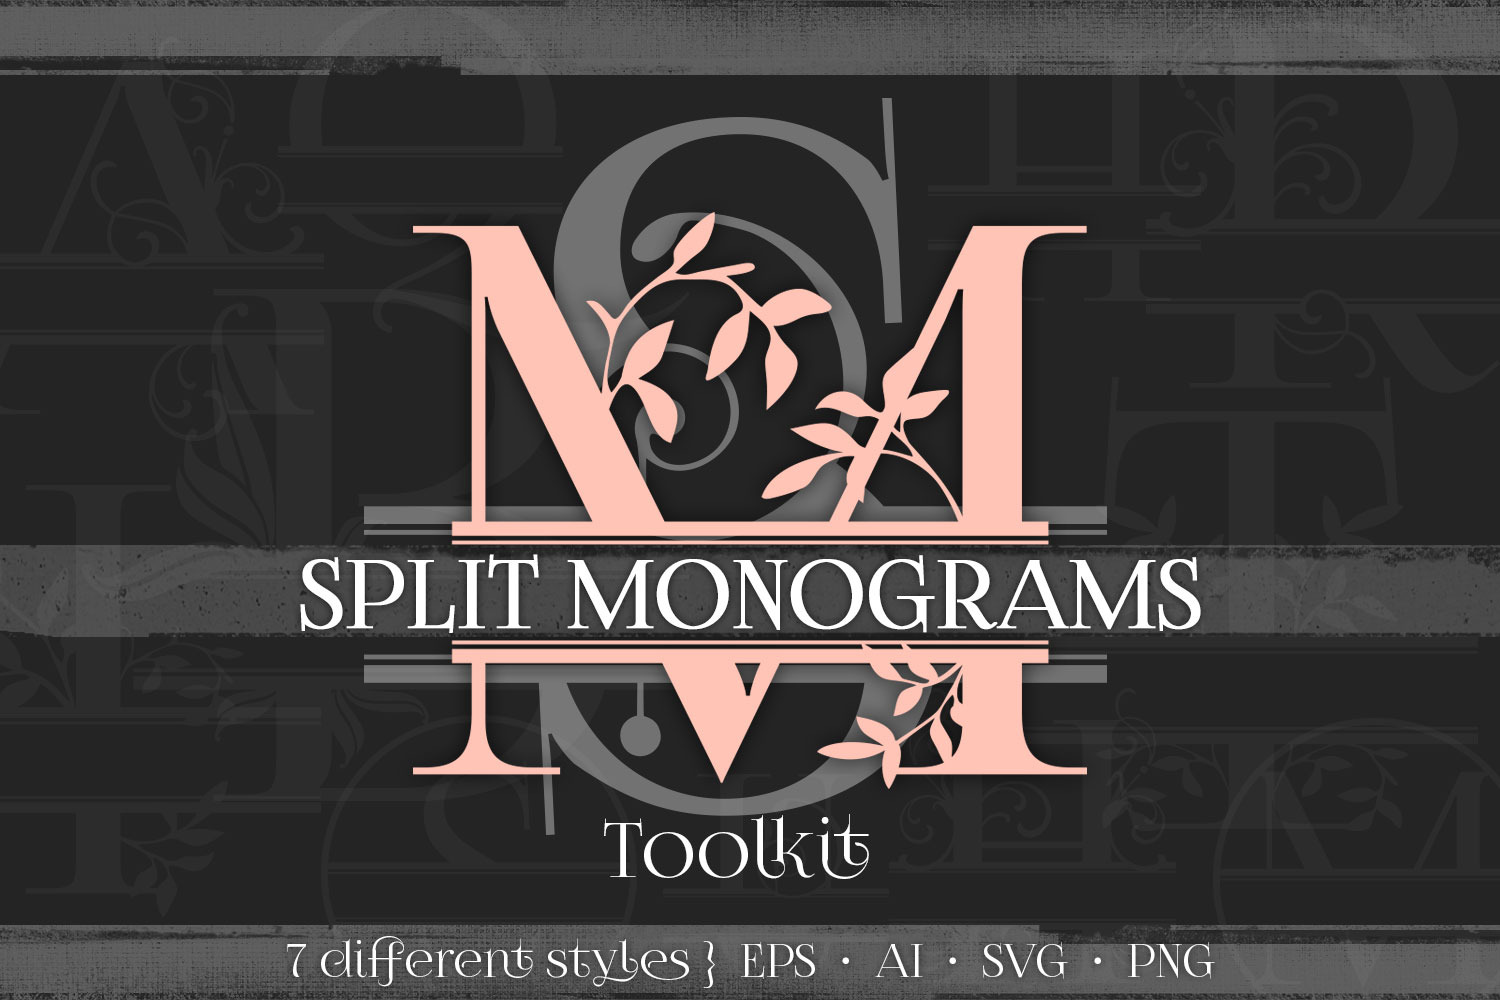 Split Monograms Vector Toolkit ~ Graphic Objects ...